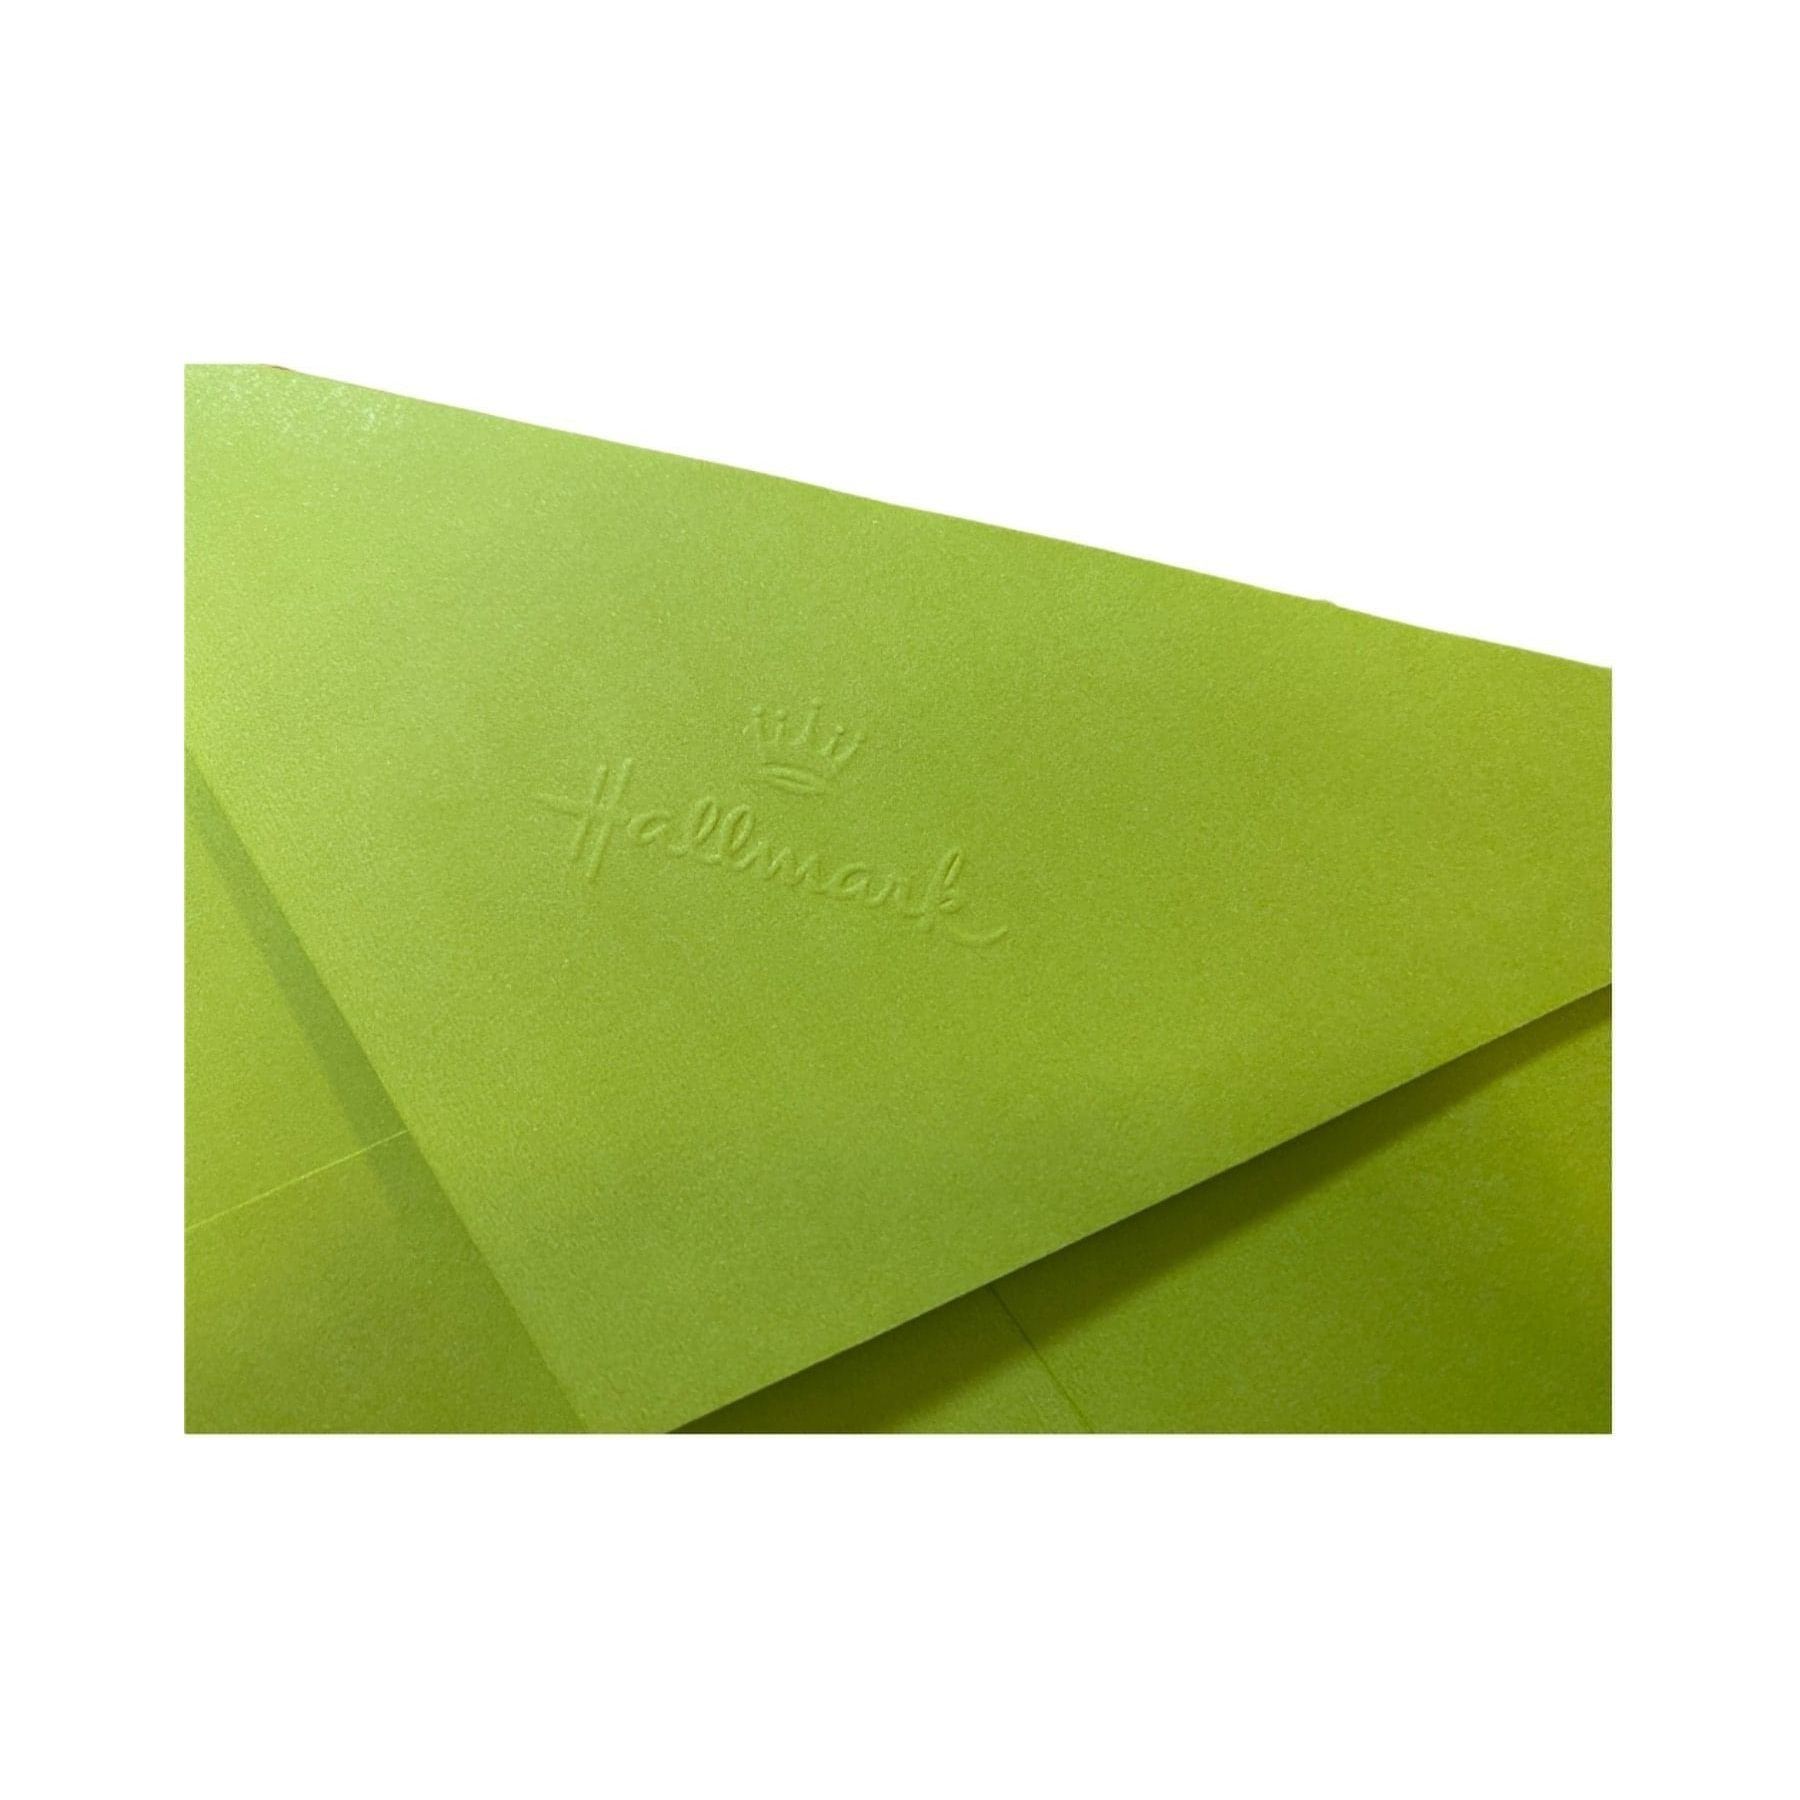 Hallmark-Birthday Card with Envelope - Heartline by Hallmark - "DON'T LOSE THIS BIRTHDAY CARD!" - Brandat Outlet